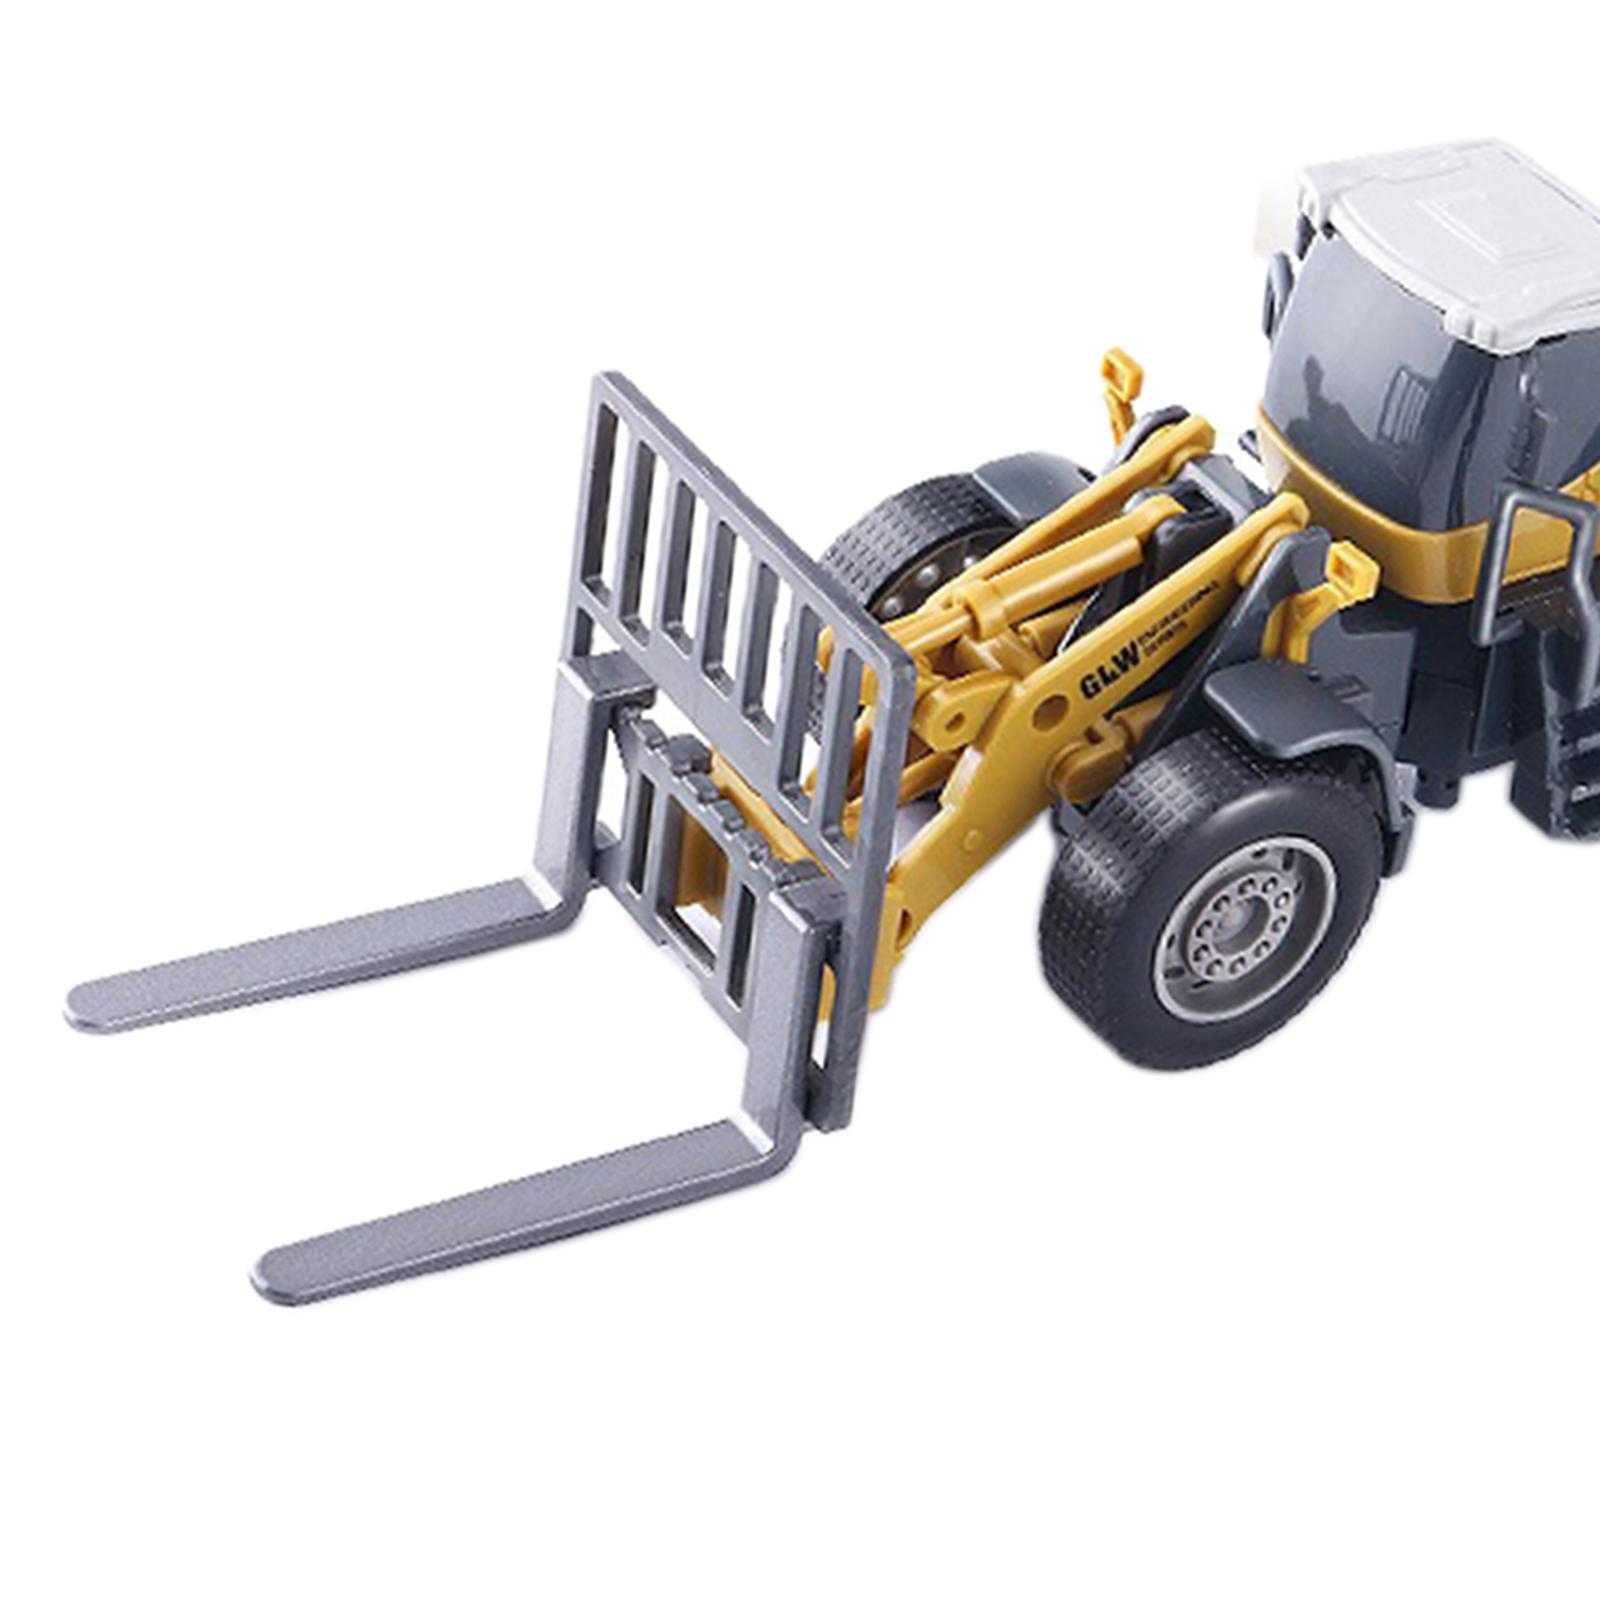 Детска играчка- Строителни превозни средства,1:55 Симулационен модел